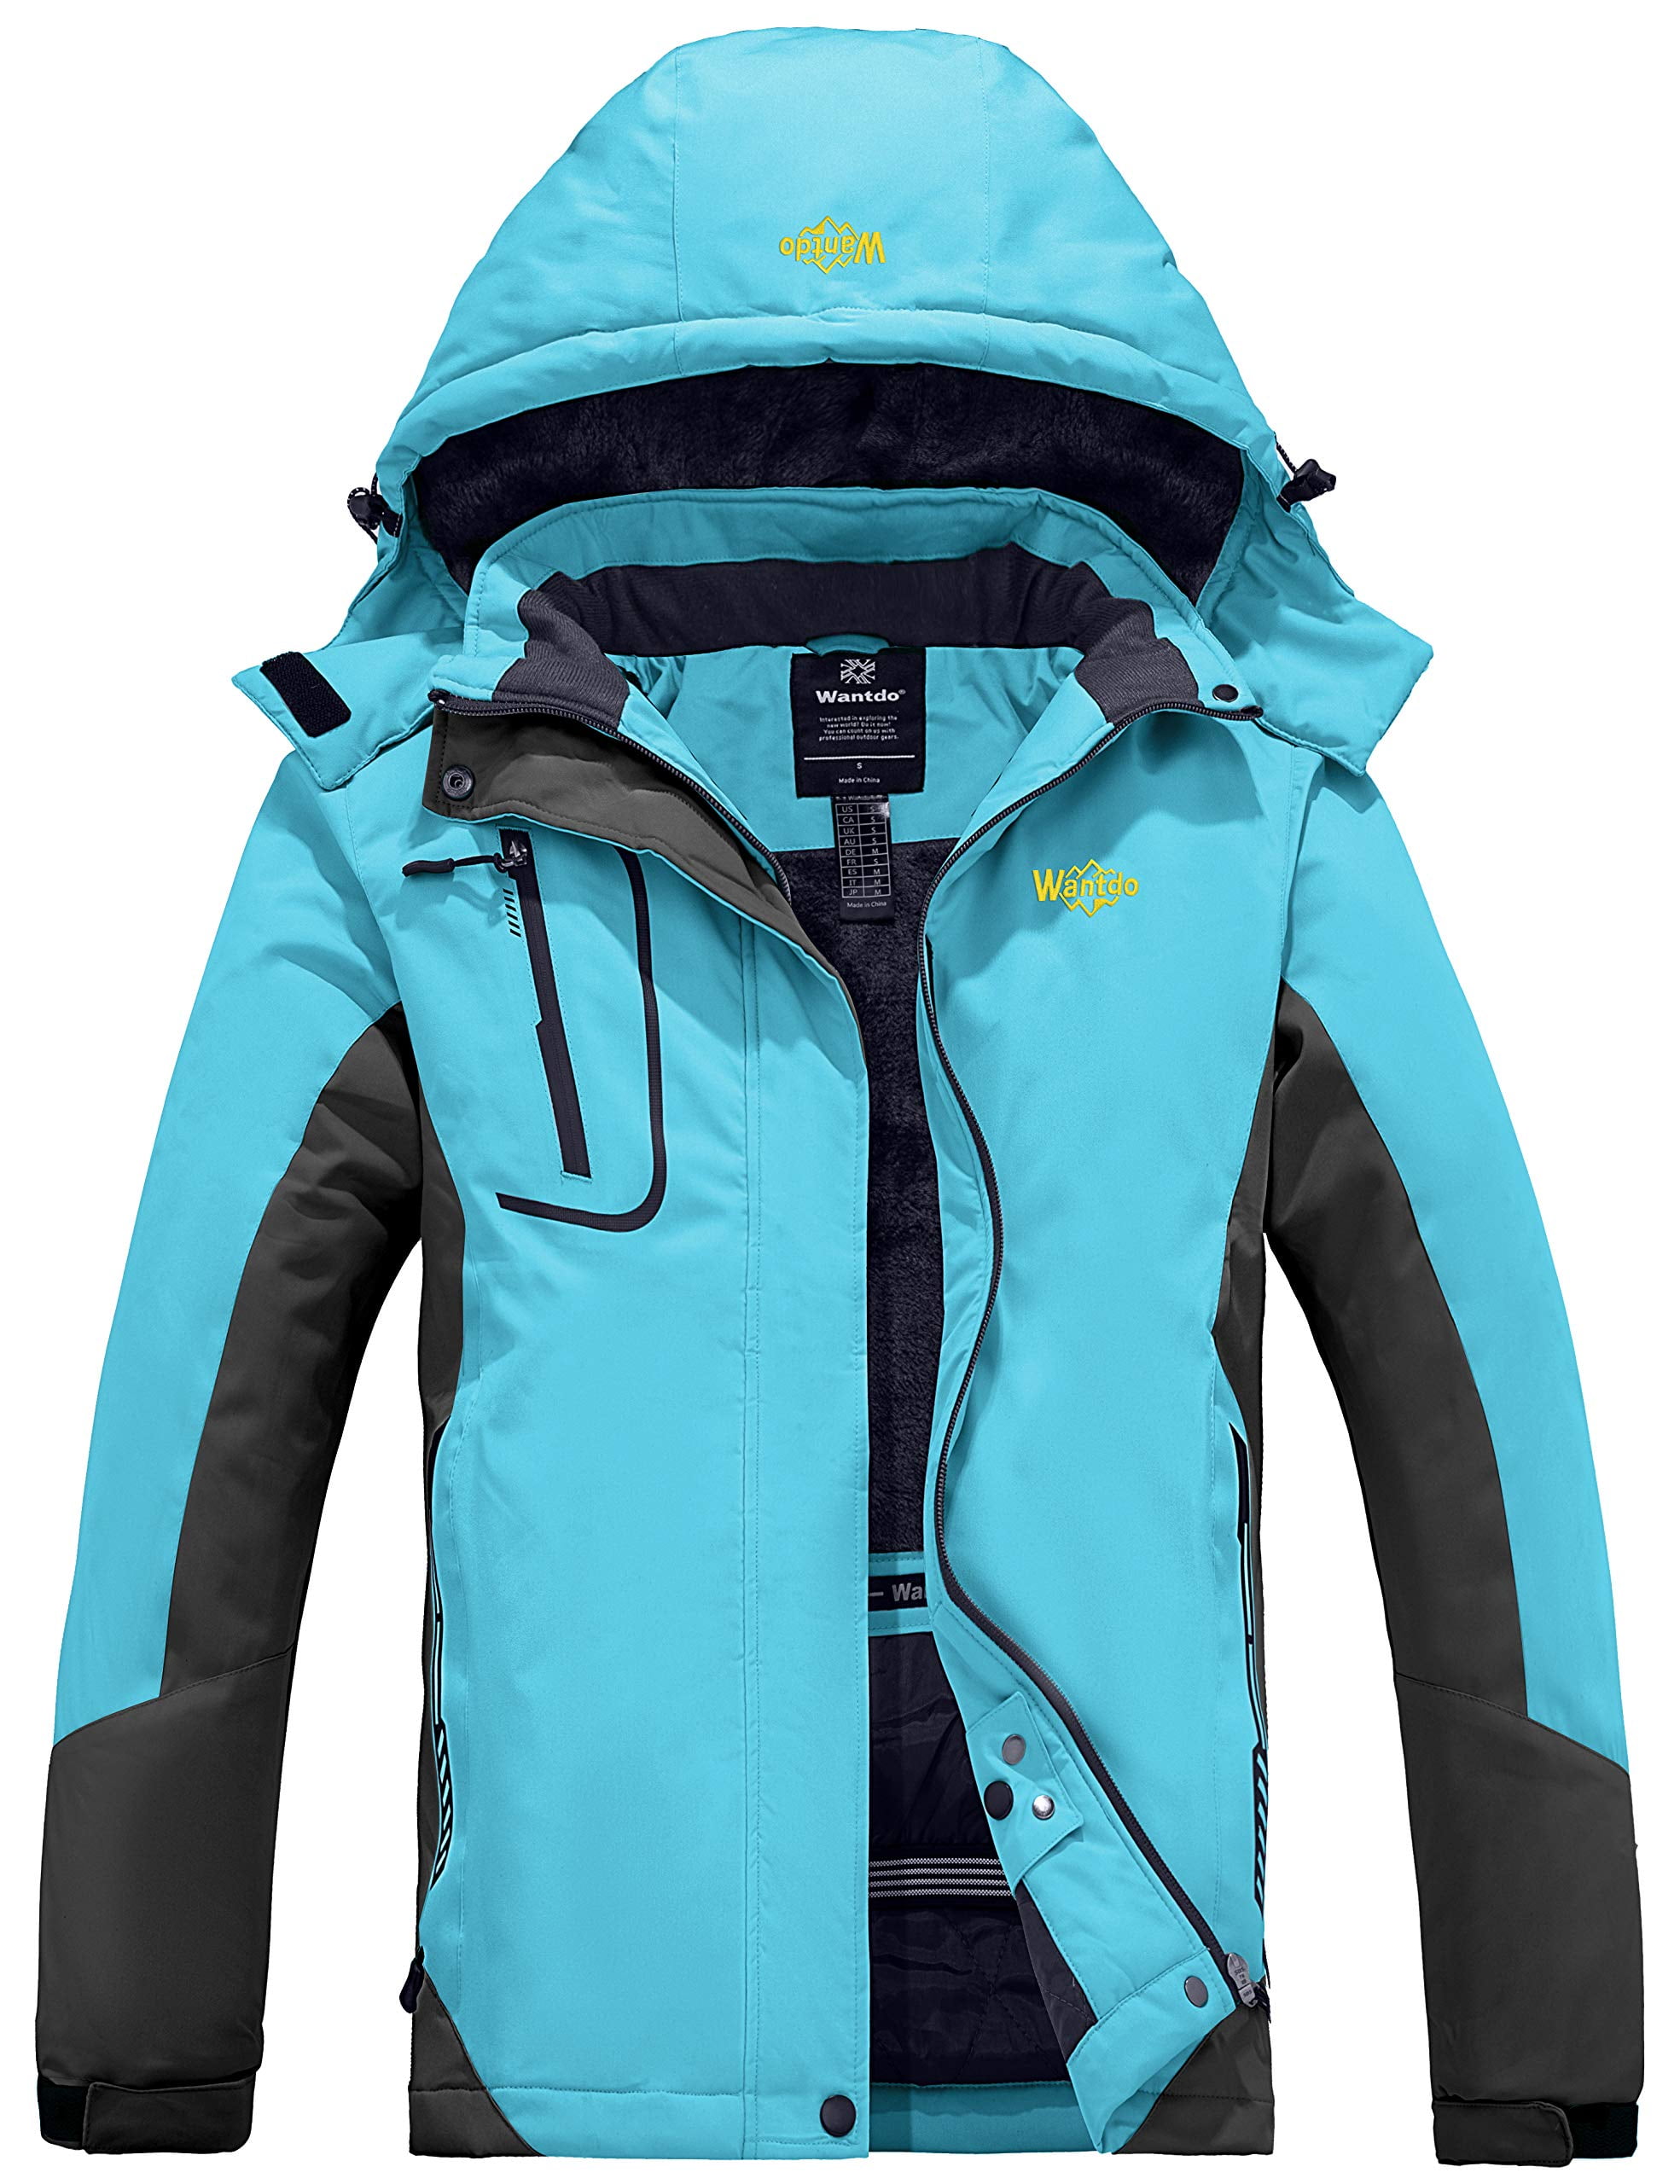 Wantdo Womens Waterproof Ski Jacket Warm Winter Coat Windproof Snow Coats Warm Fleece Raincoat